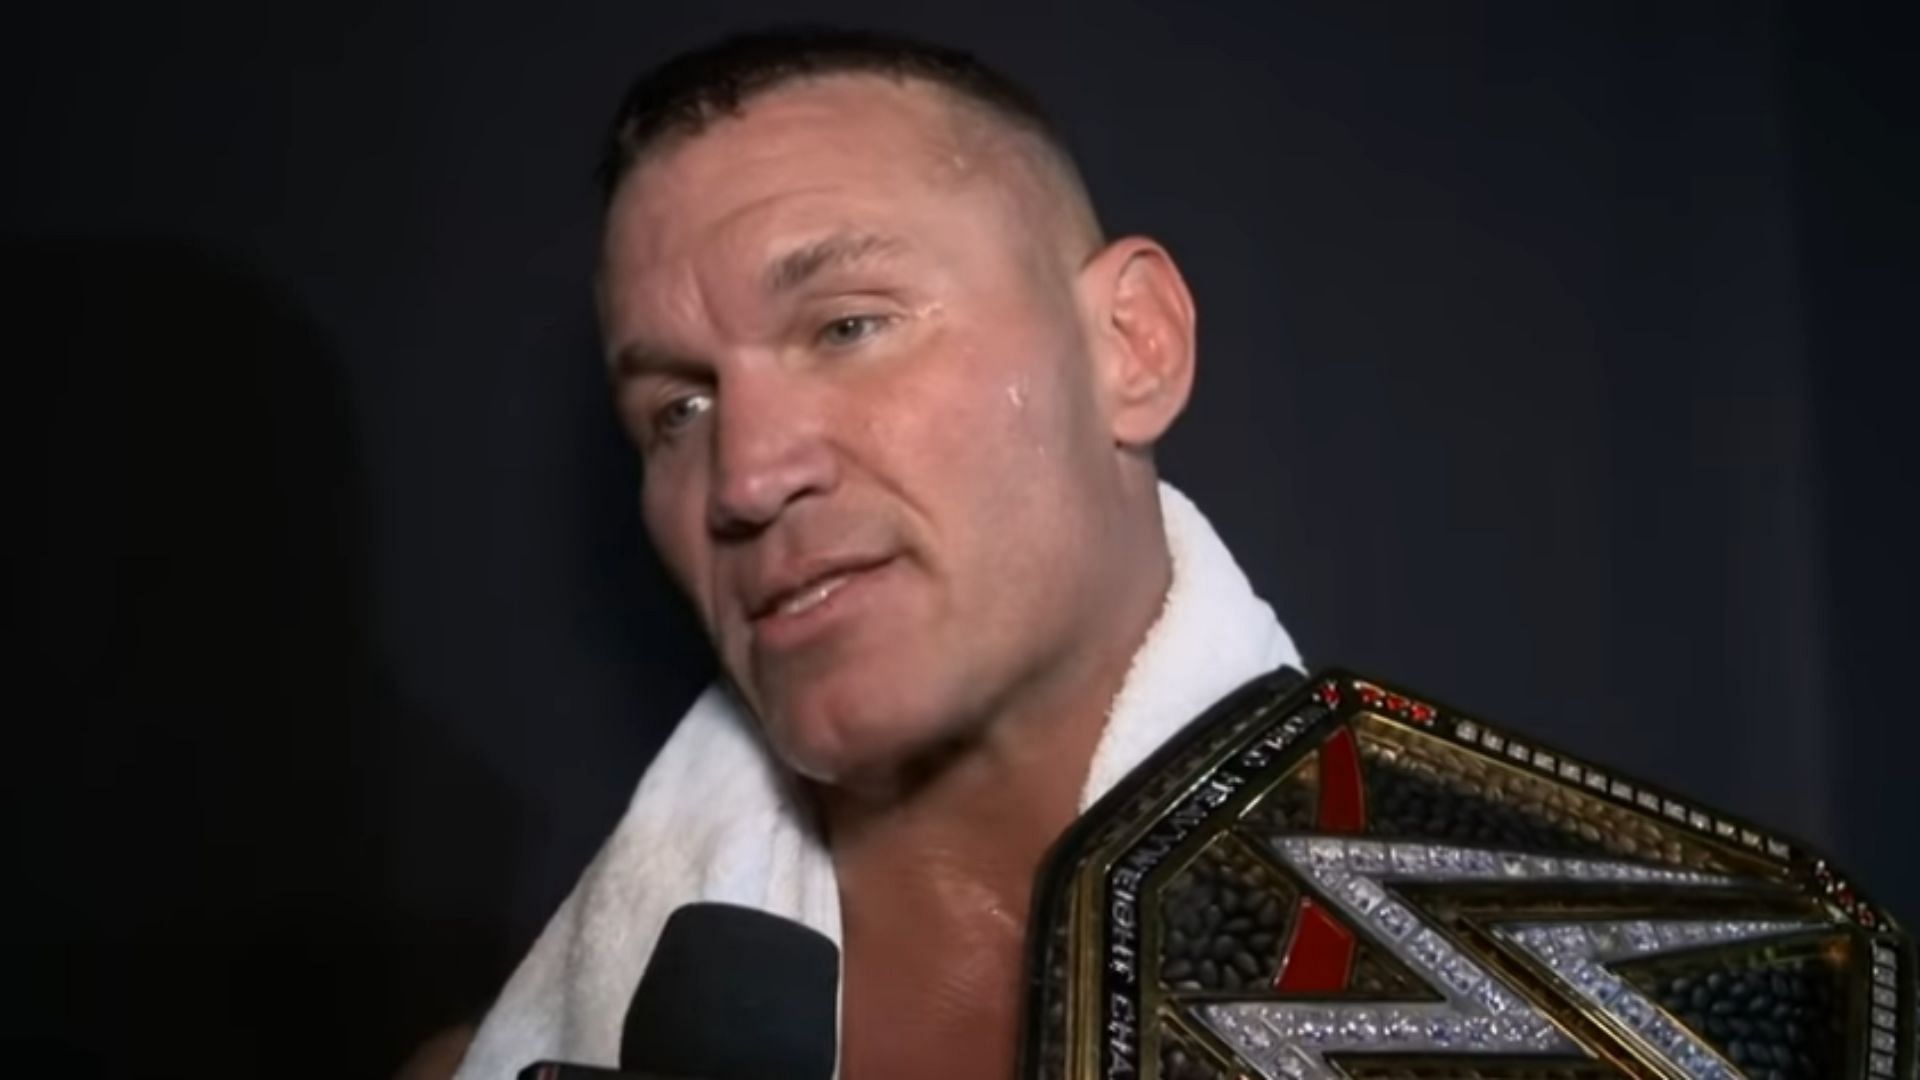 Randy Orton is one of WWE